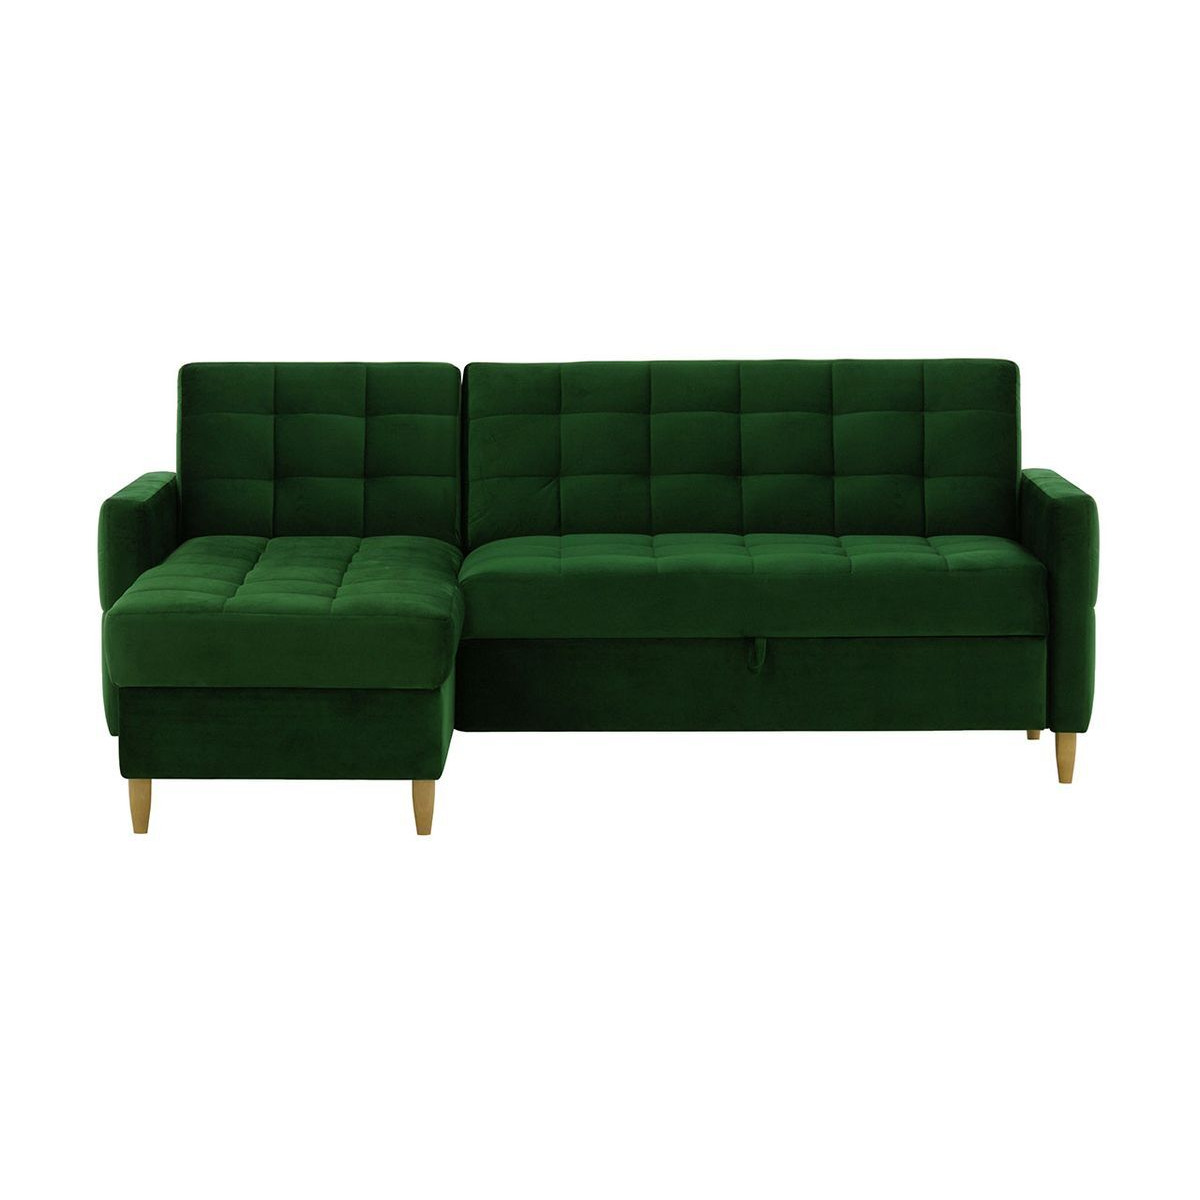 Velocity Universal Corner Sofa Bed With Storage, dark green - image 1